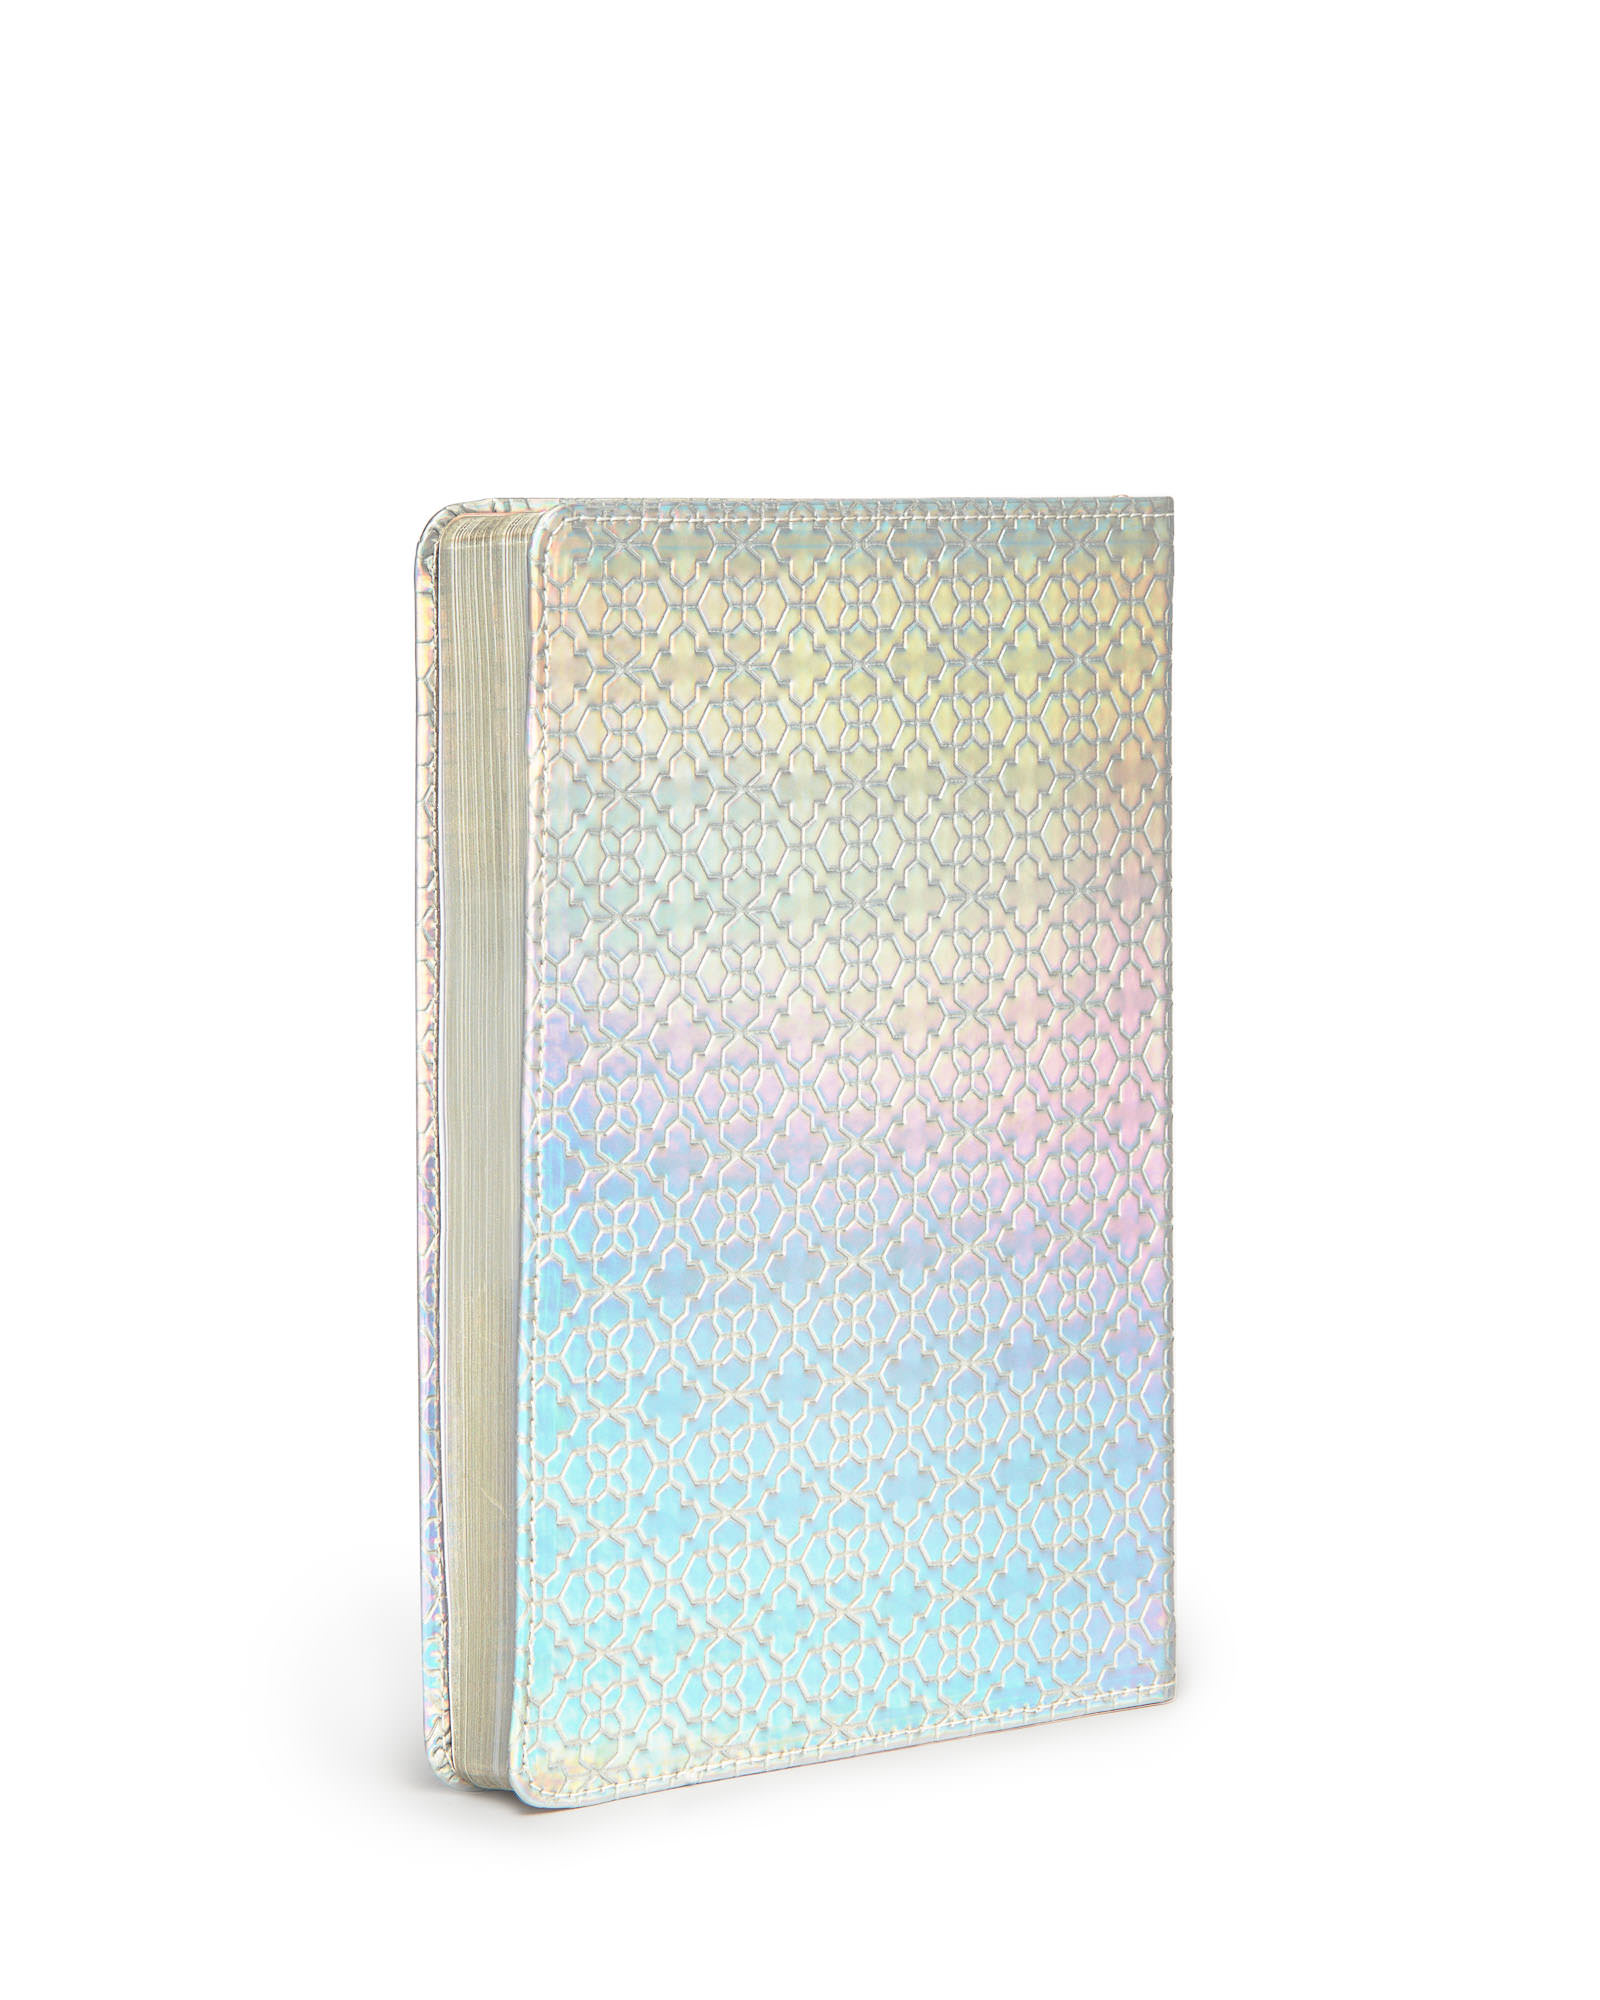 Hardcover Notebook in Iridescent Filigree